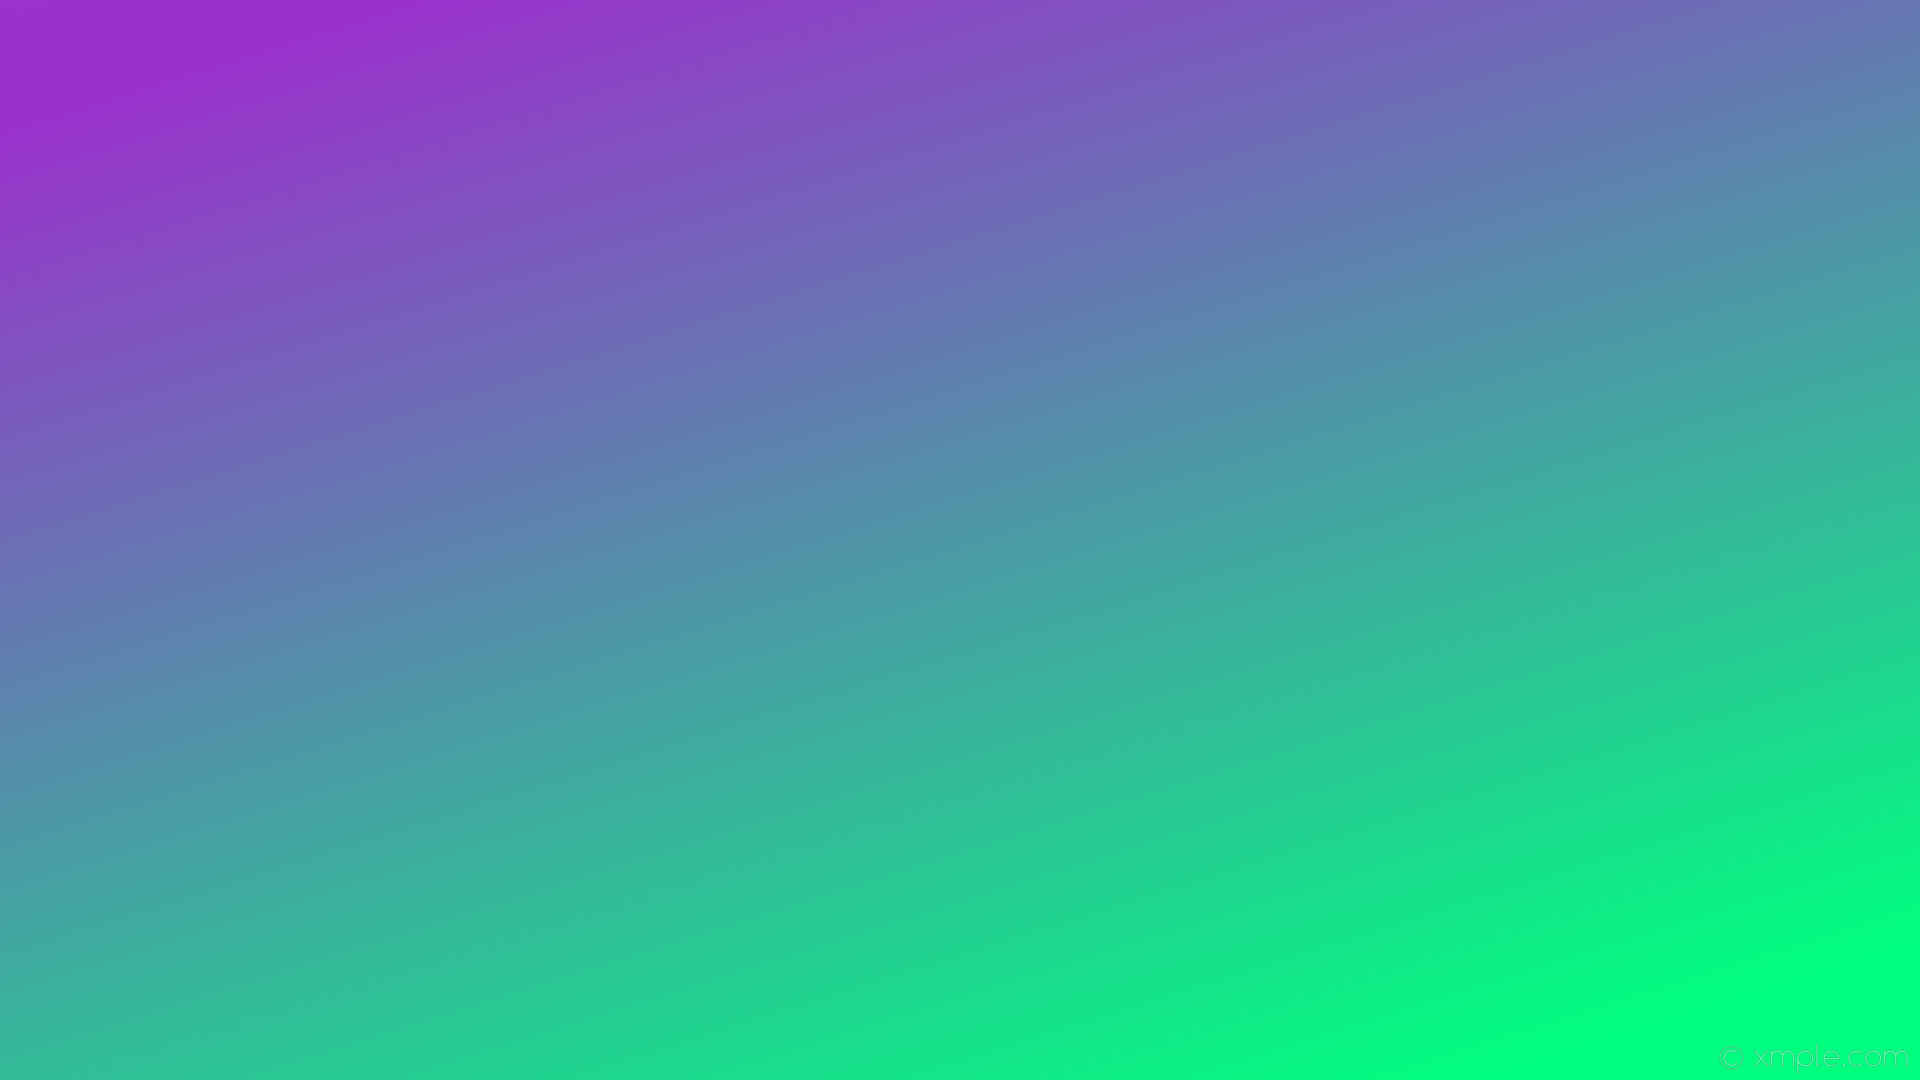 1920x1080 wallpaper green gradient linear purple spring green dark orchid #00ff7f  #9932cc 315Â°